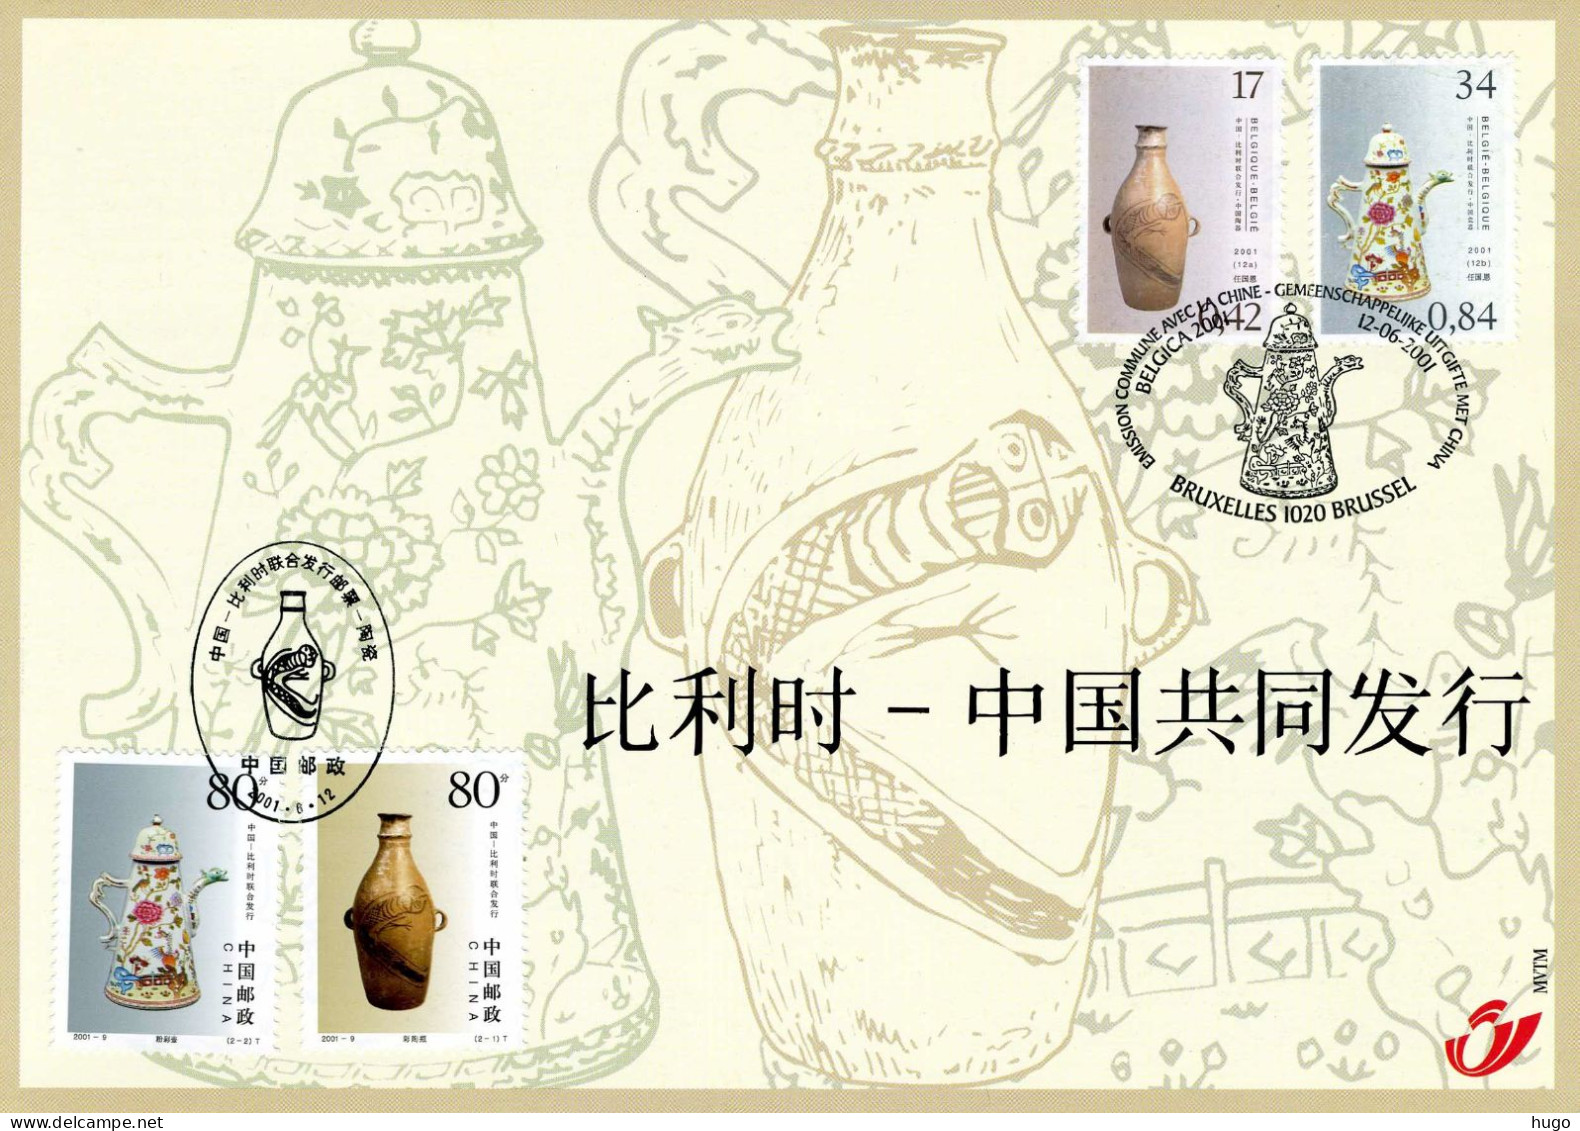 (B) Chinese Kunstwerken 3008HK - 2001 - Souvenir Cards - Joint Issues [HK]